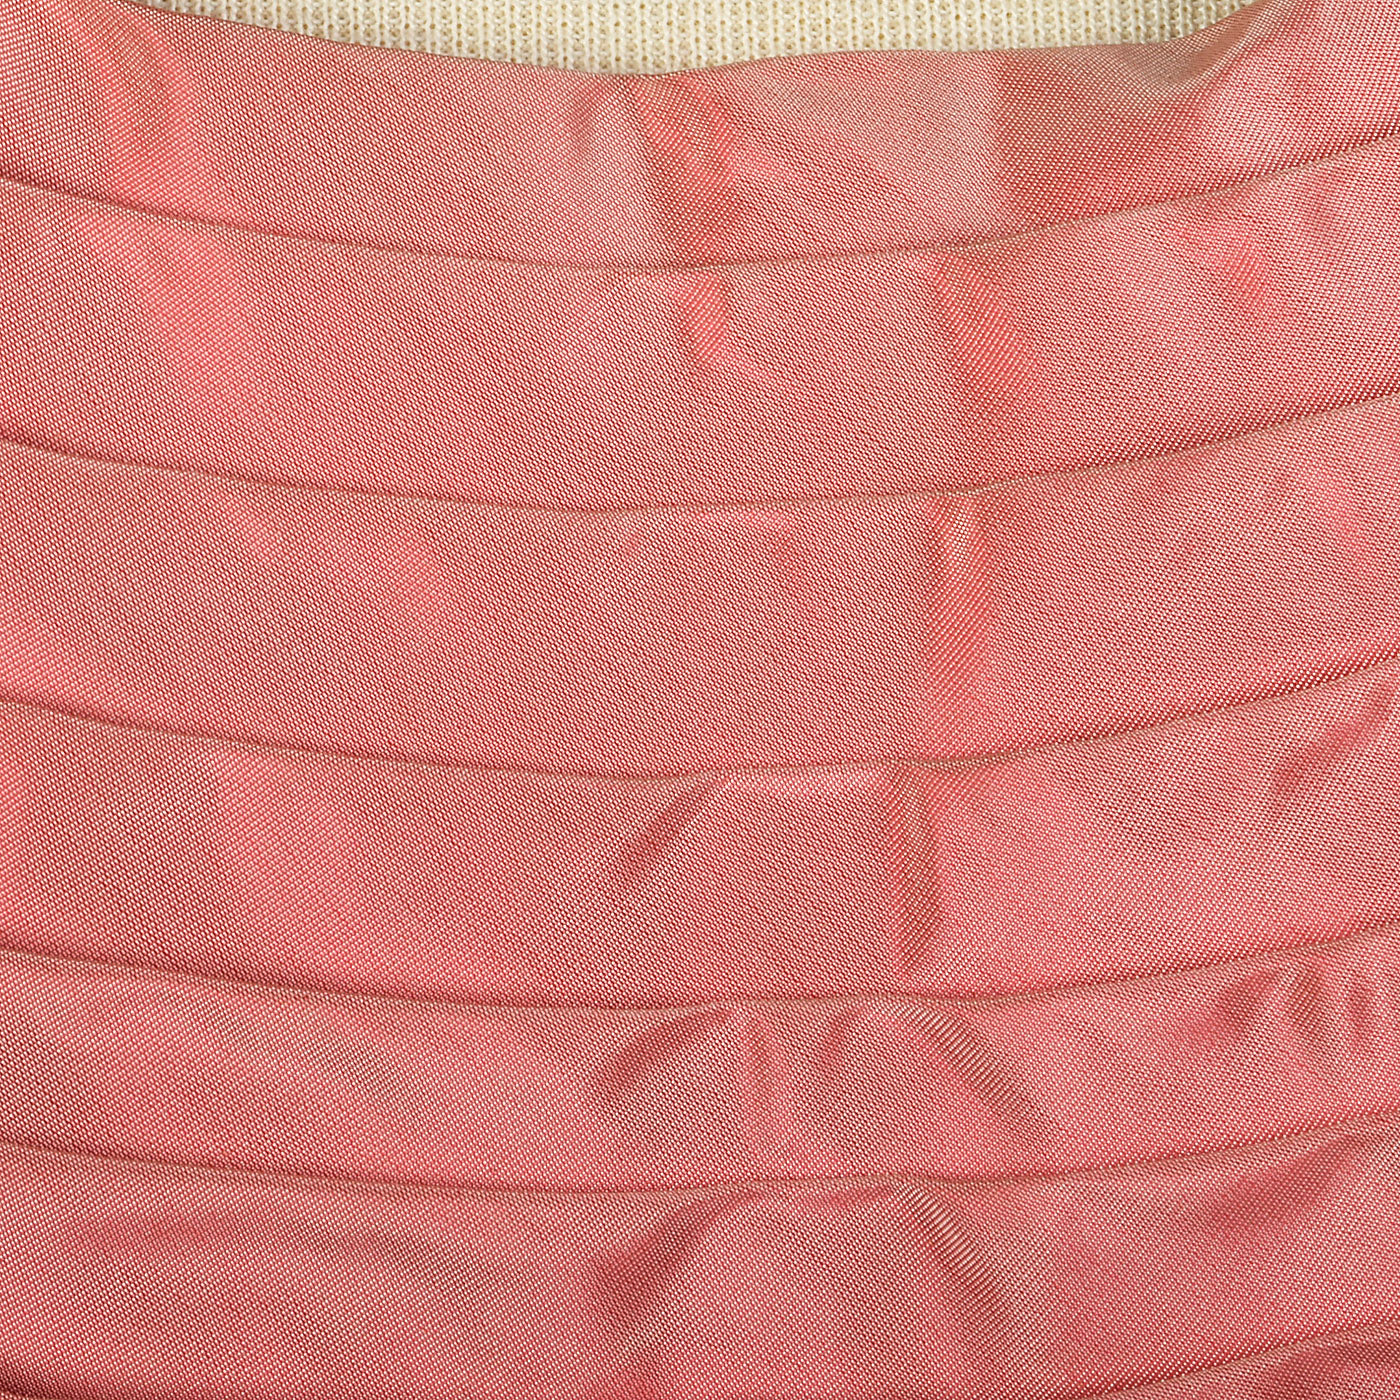 1950s Pink Taffeta Party Dress